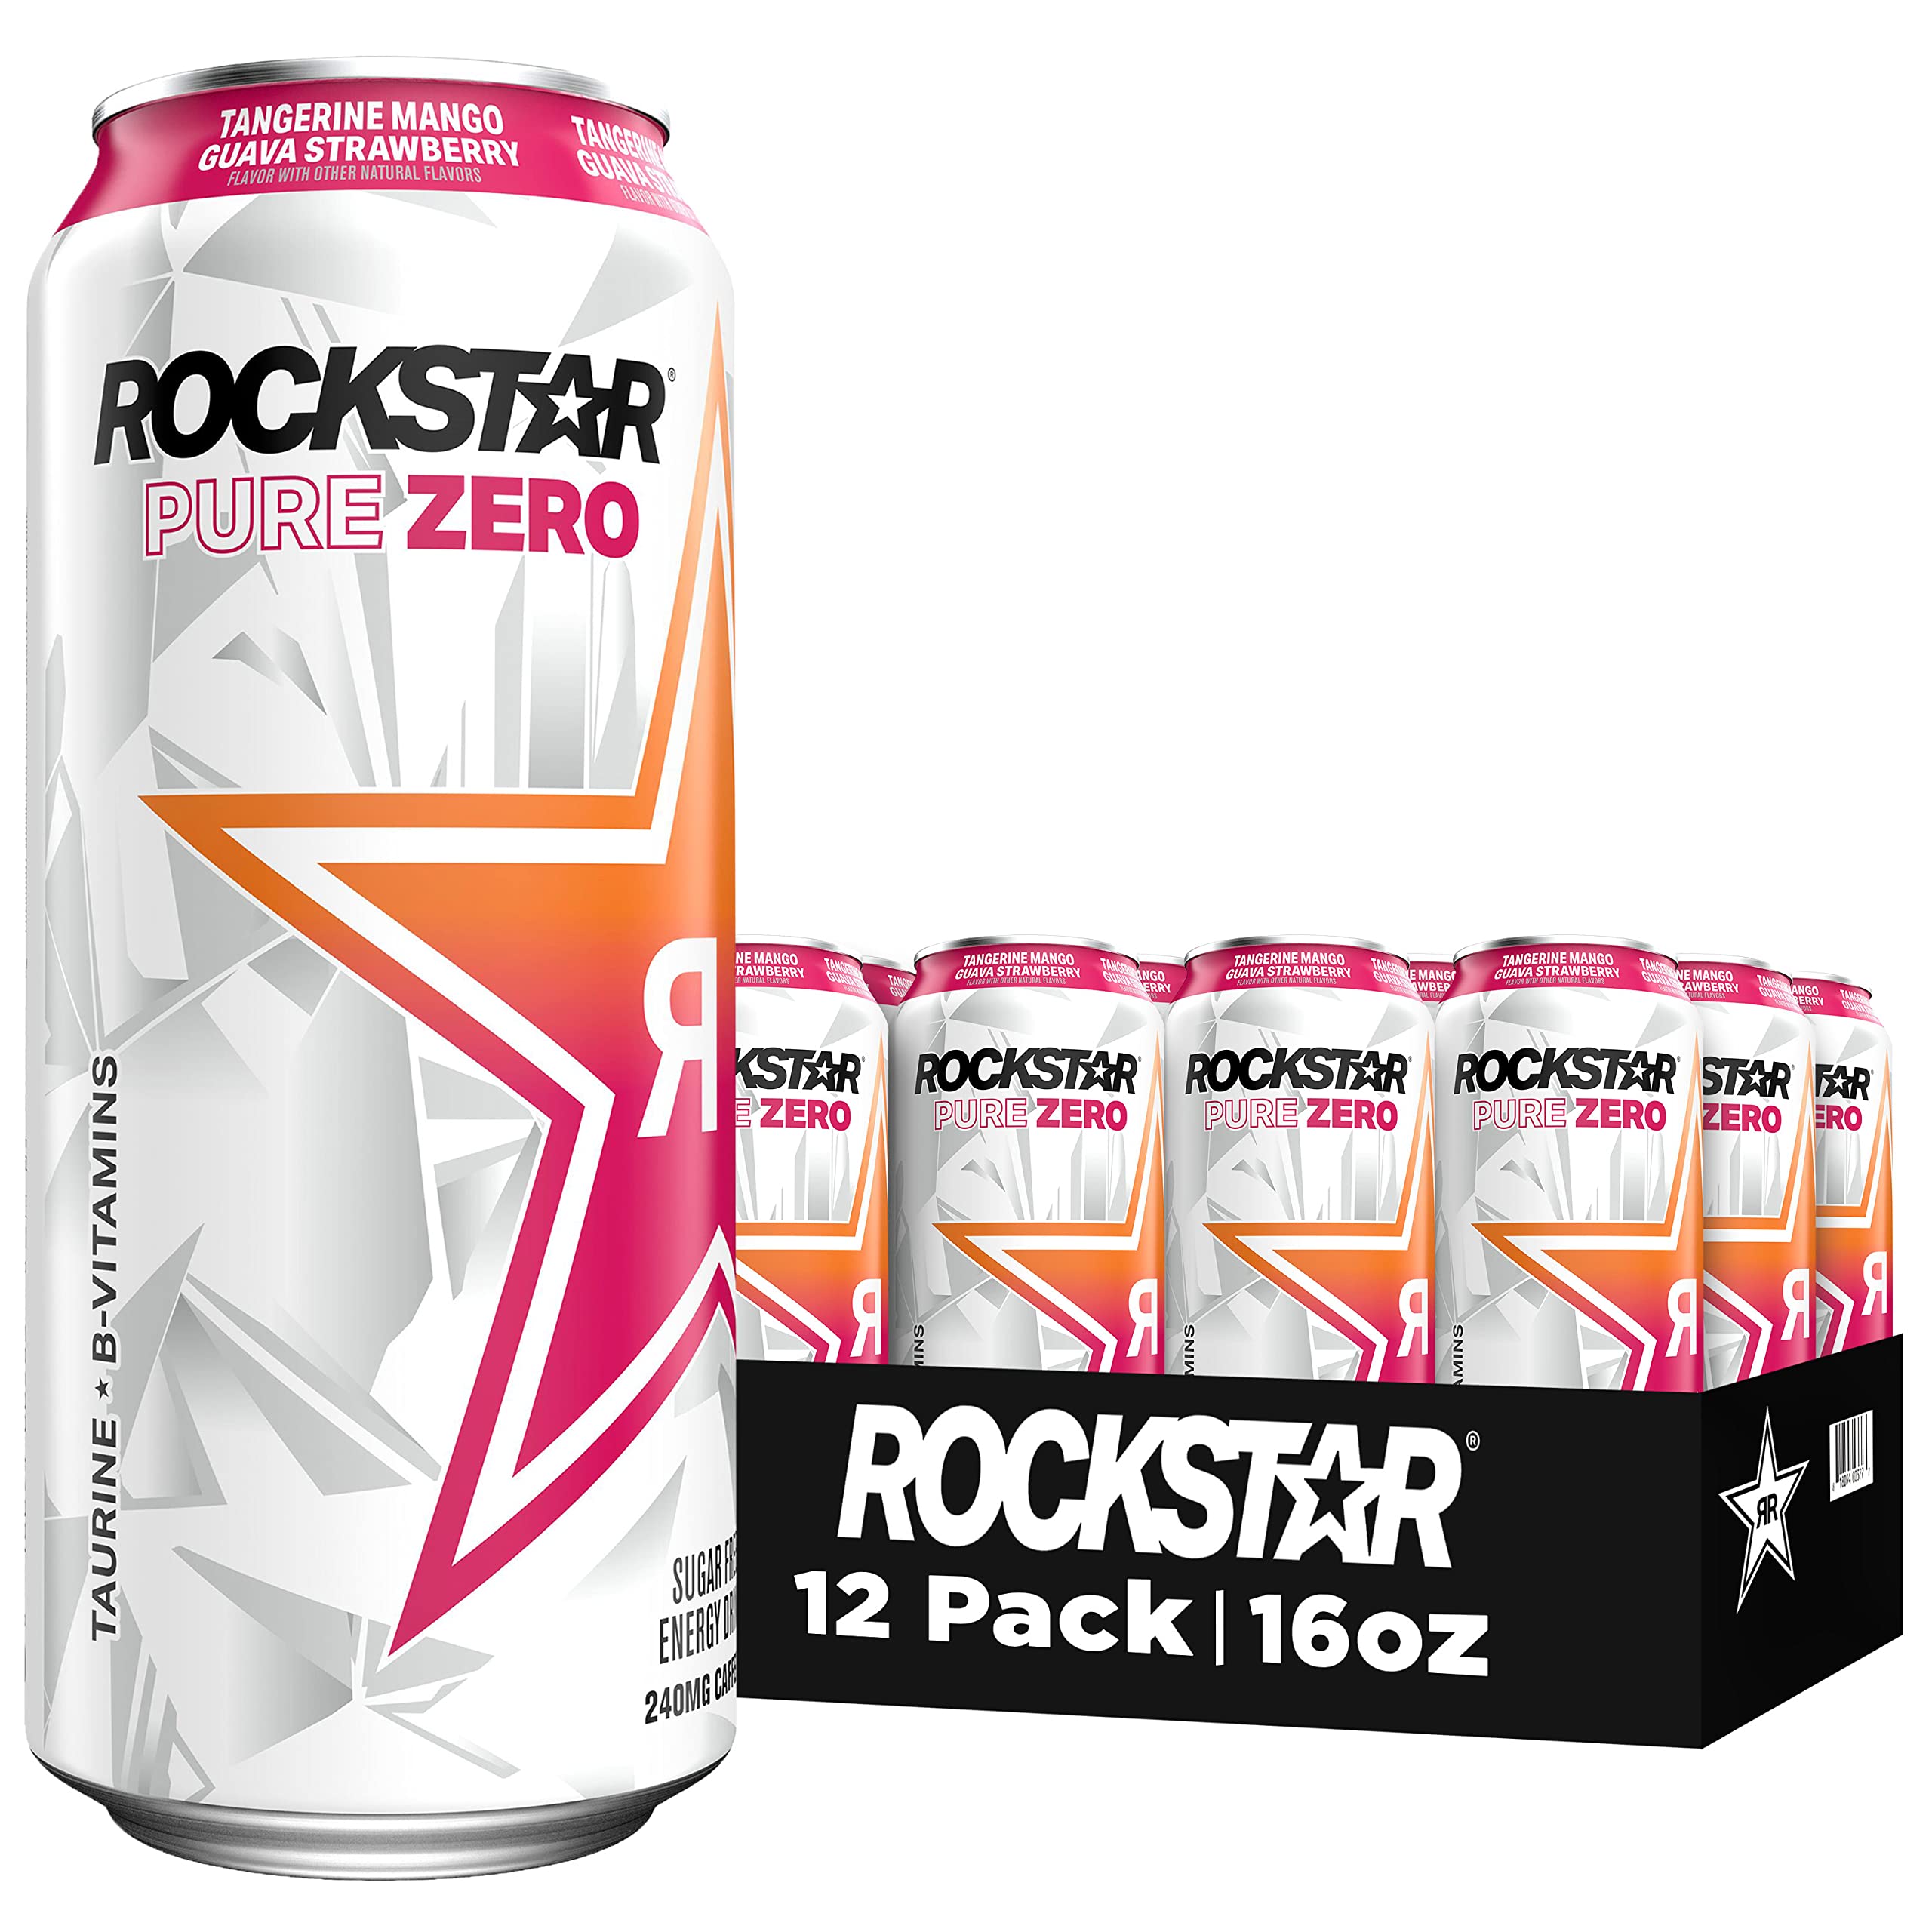 12-Pack 16-Oz Rockstar Pure Zero Energy Drink w/ Caffeine & Taurine (Tangerine Mango Guava Strawberry) $14.25 w/ S&S + Free Shipping w/ Prime or on $35+